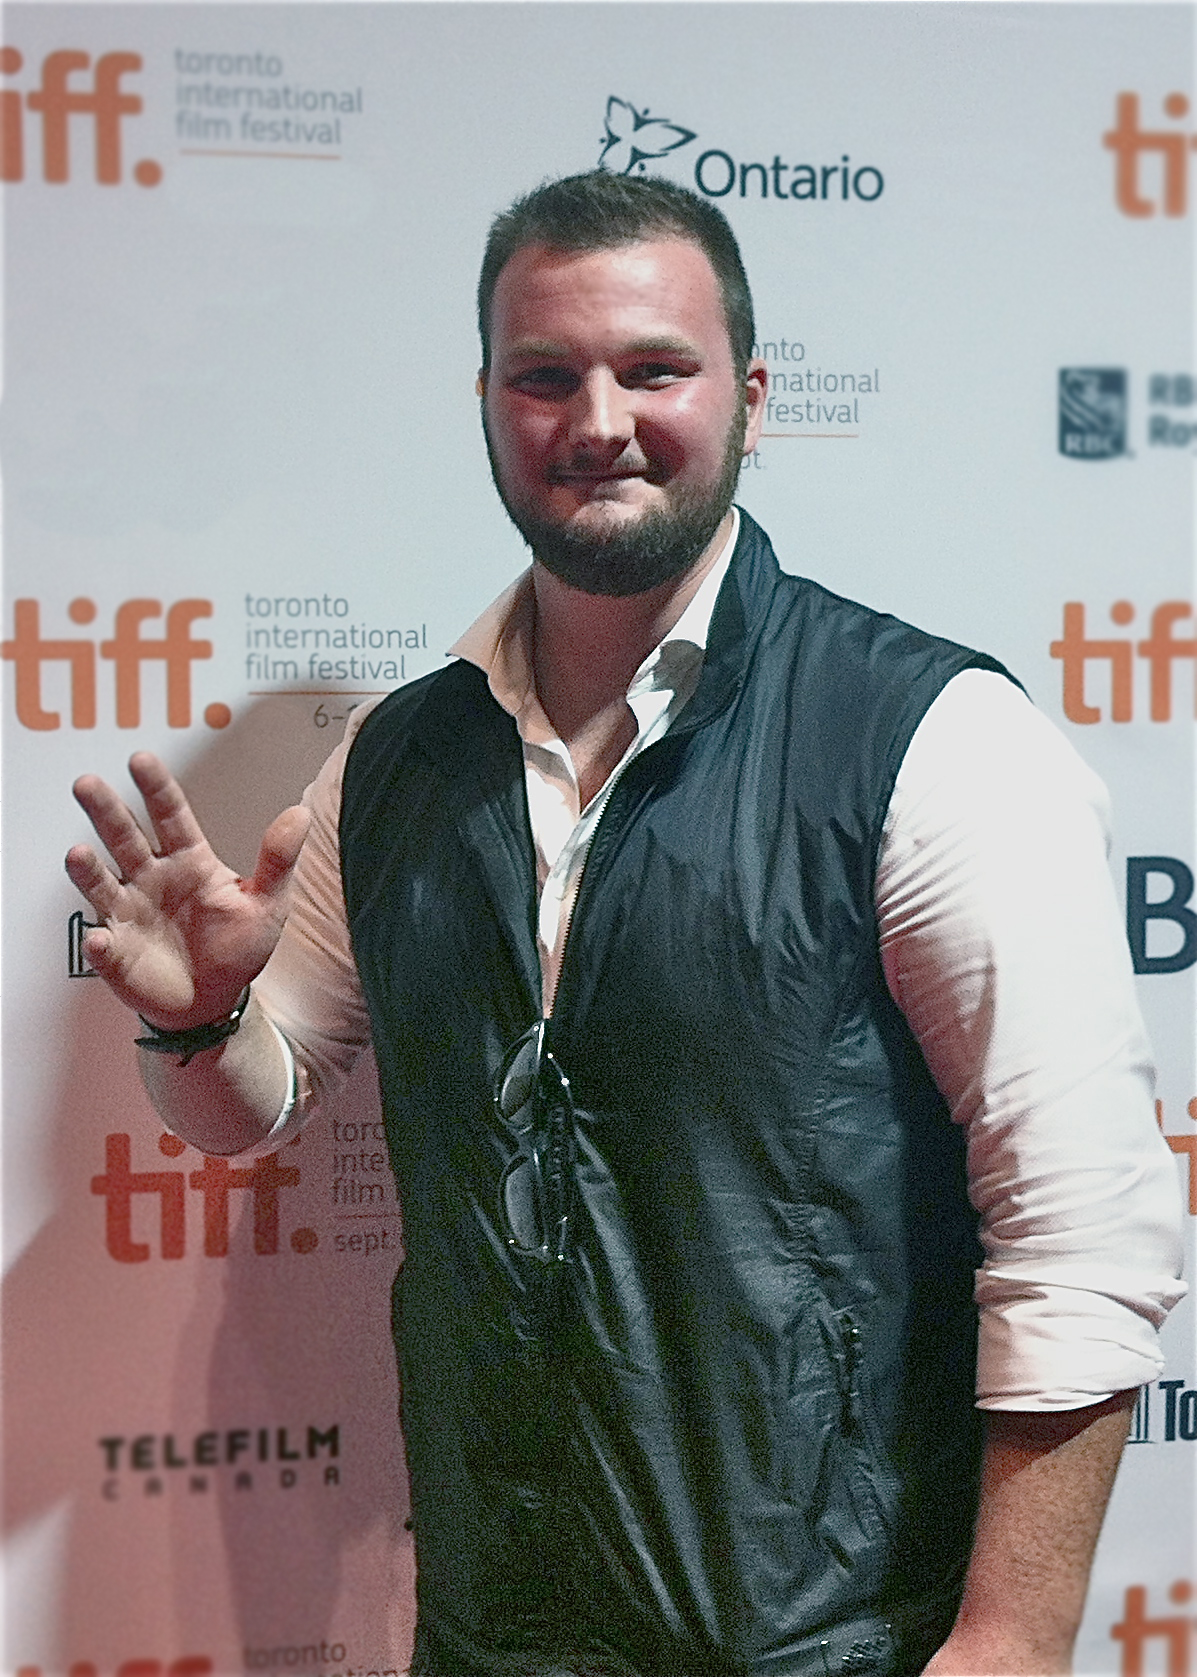 Jim Powers at the Toronto International Film Festival